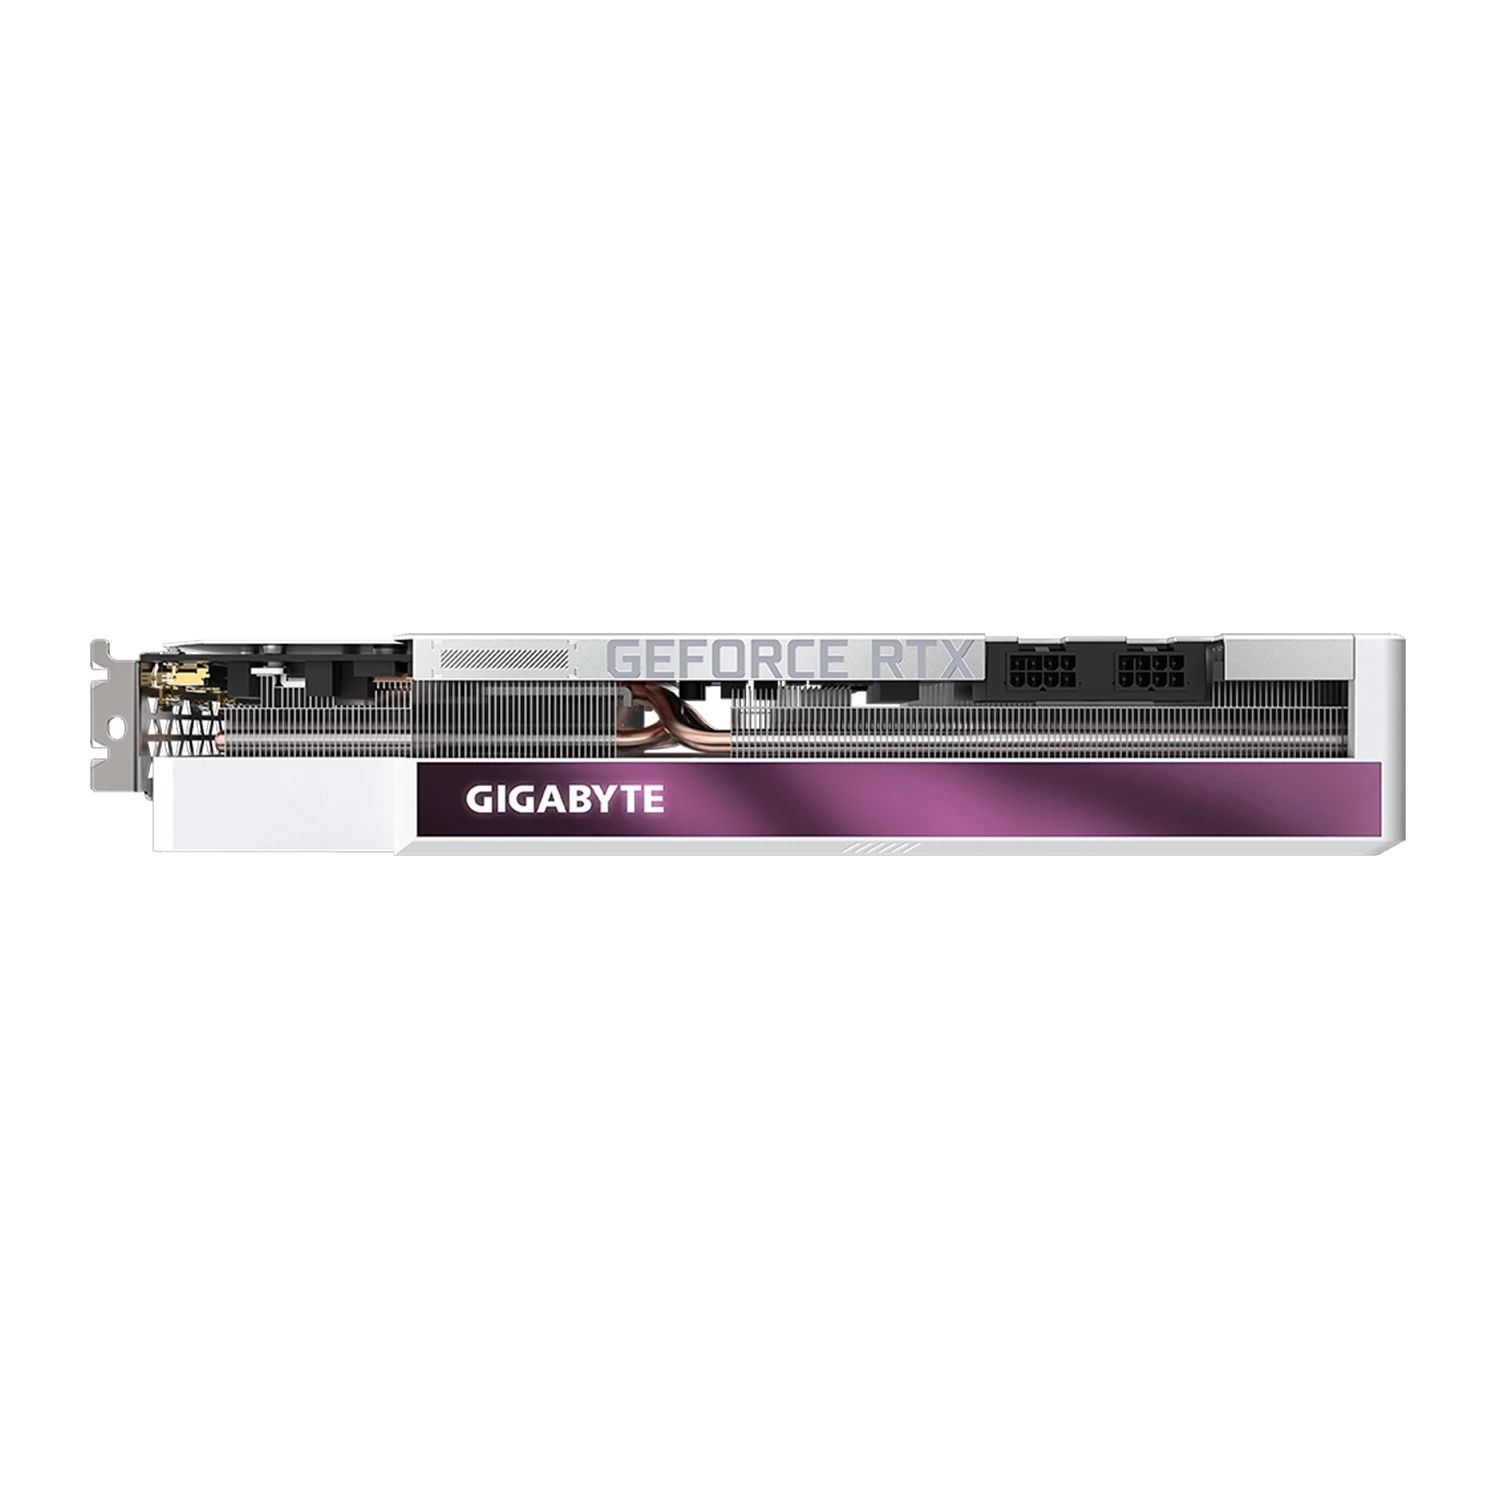 Gigabyte GeForce RTX 3070 Ti VISION OC 8G Front View